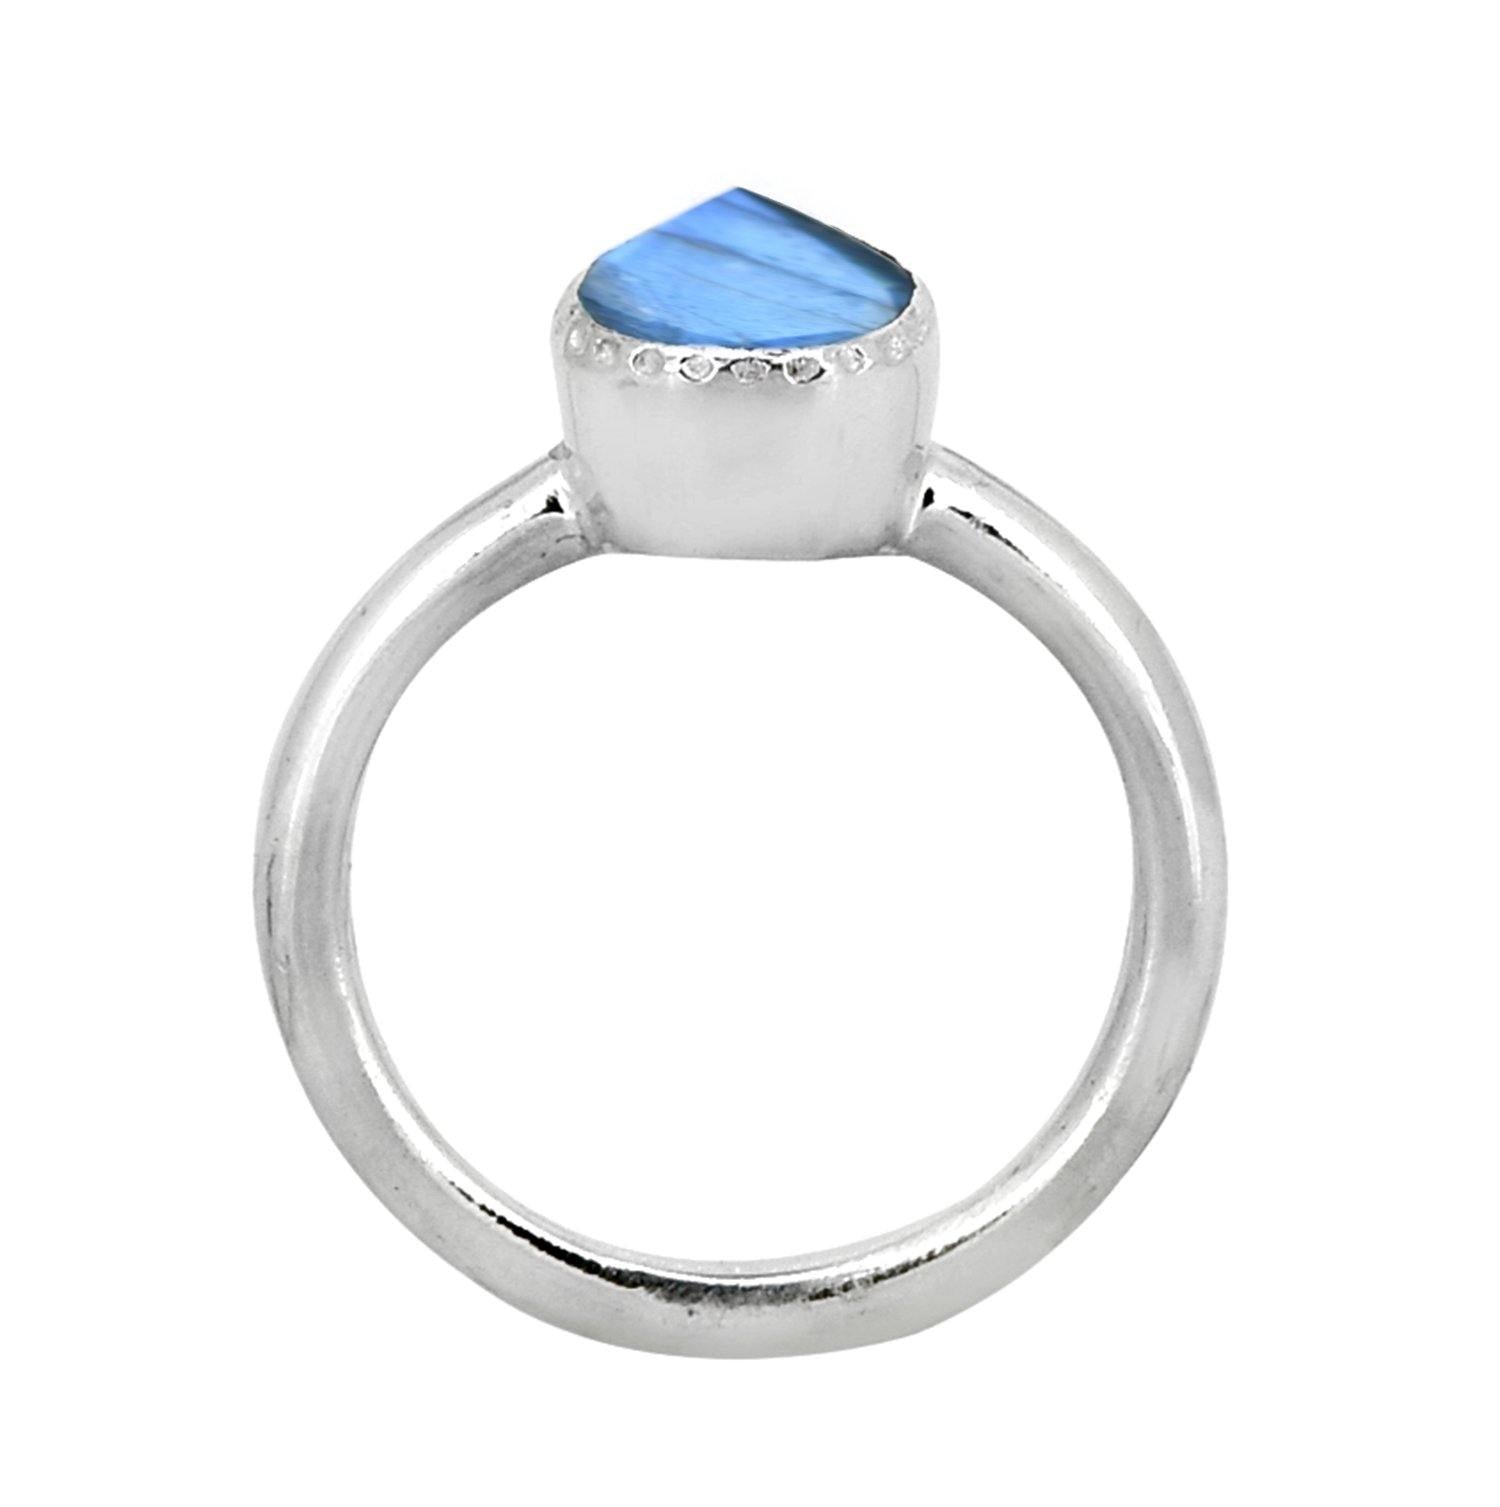 Labradorite Solid 925 Sterling Silver Gemstone Ring Jewelry For Women or Girls - YoTreasure